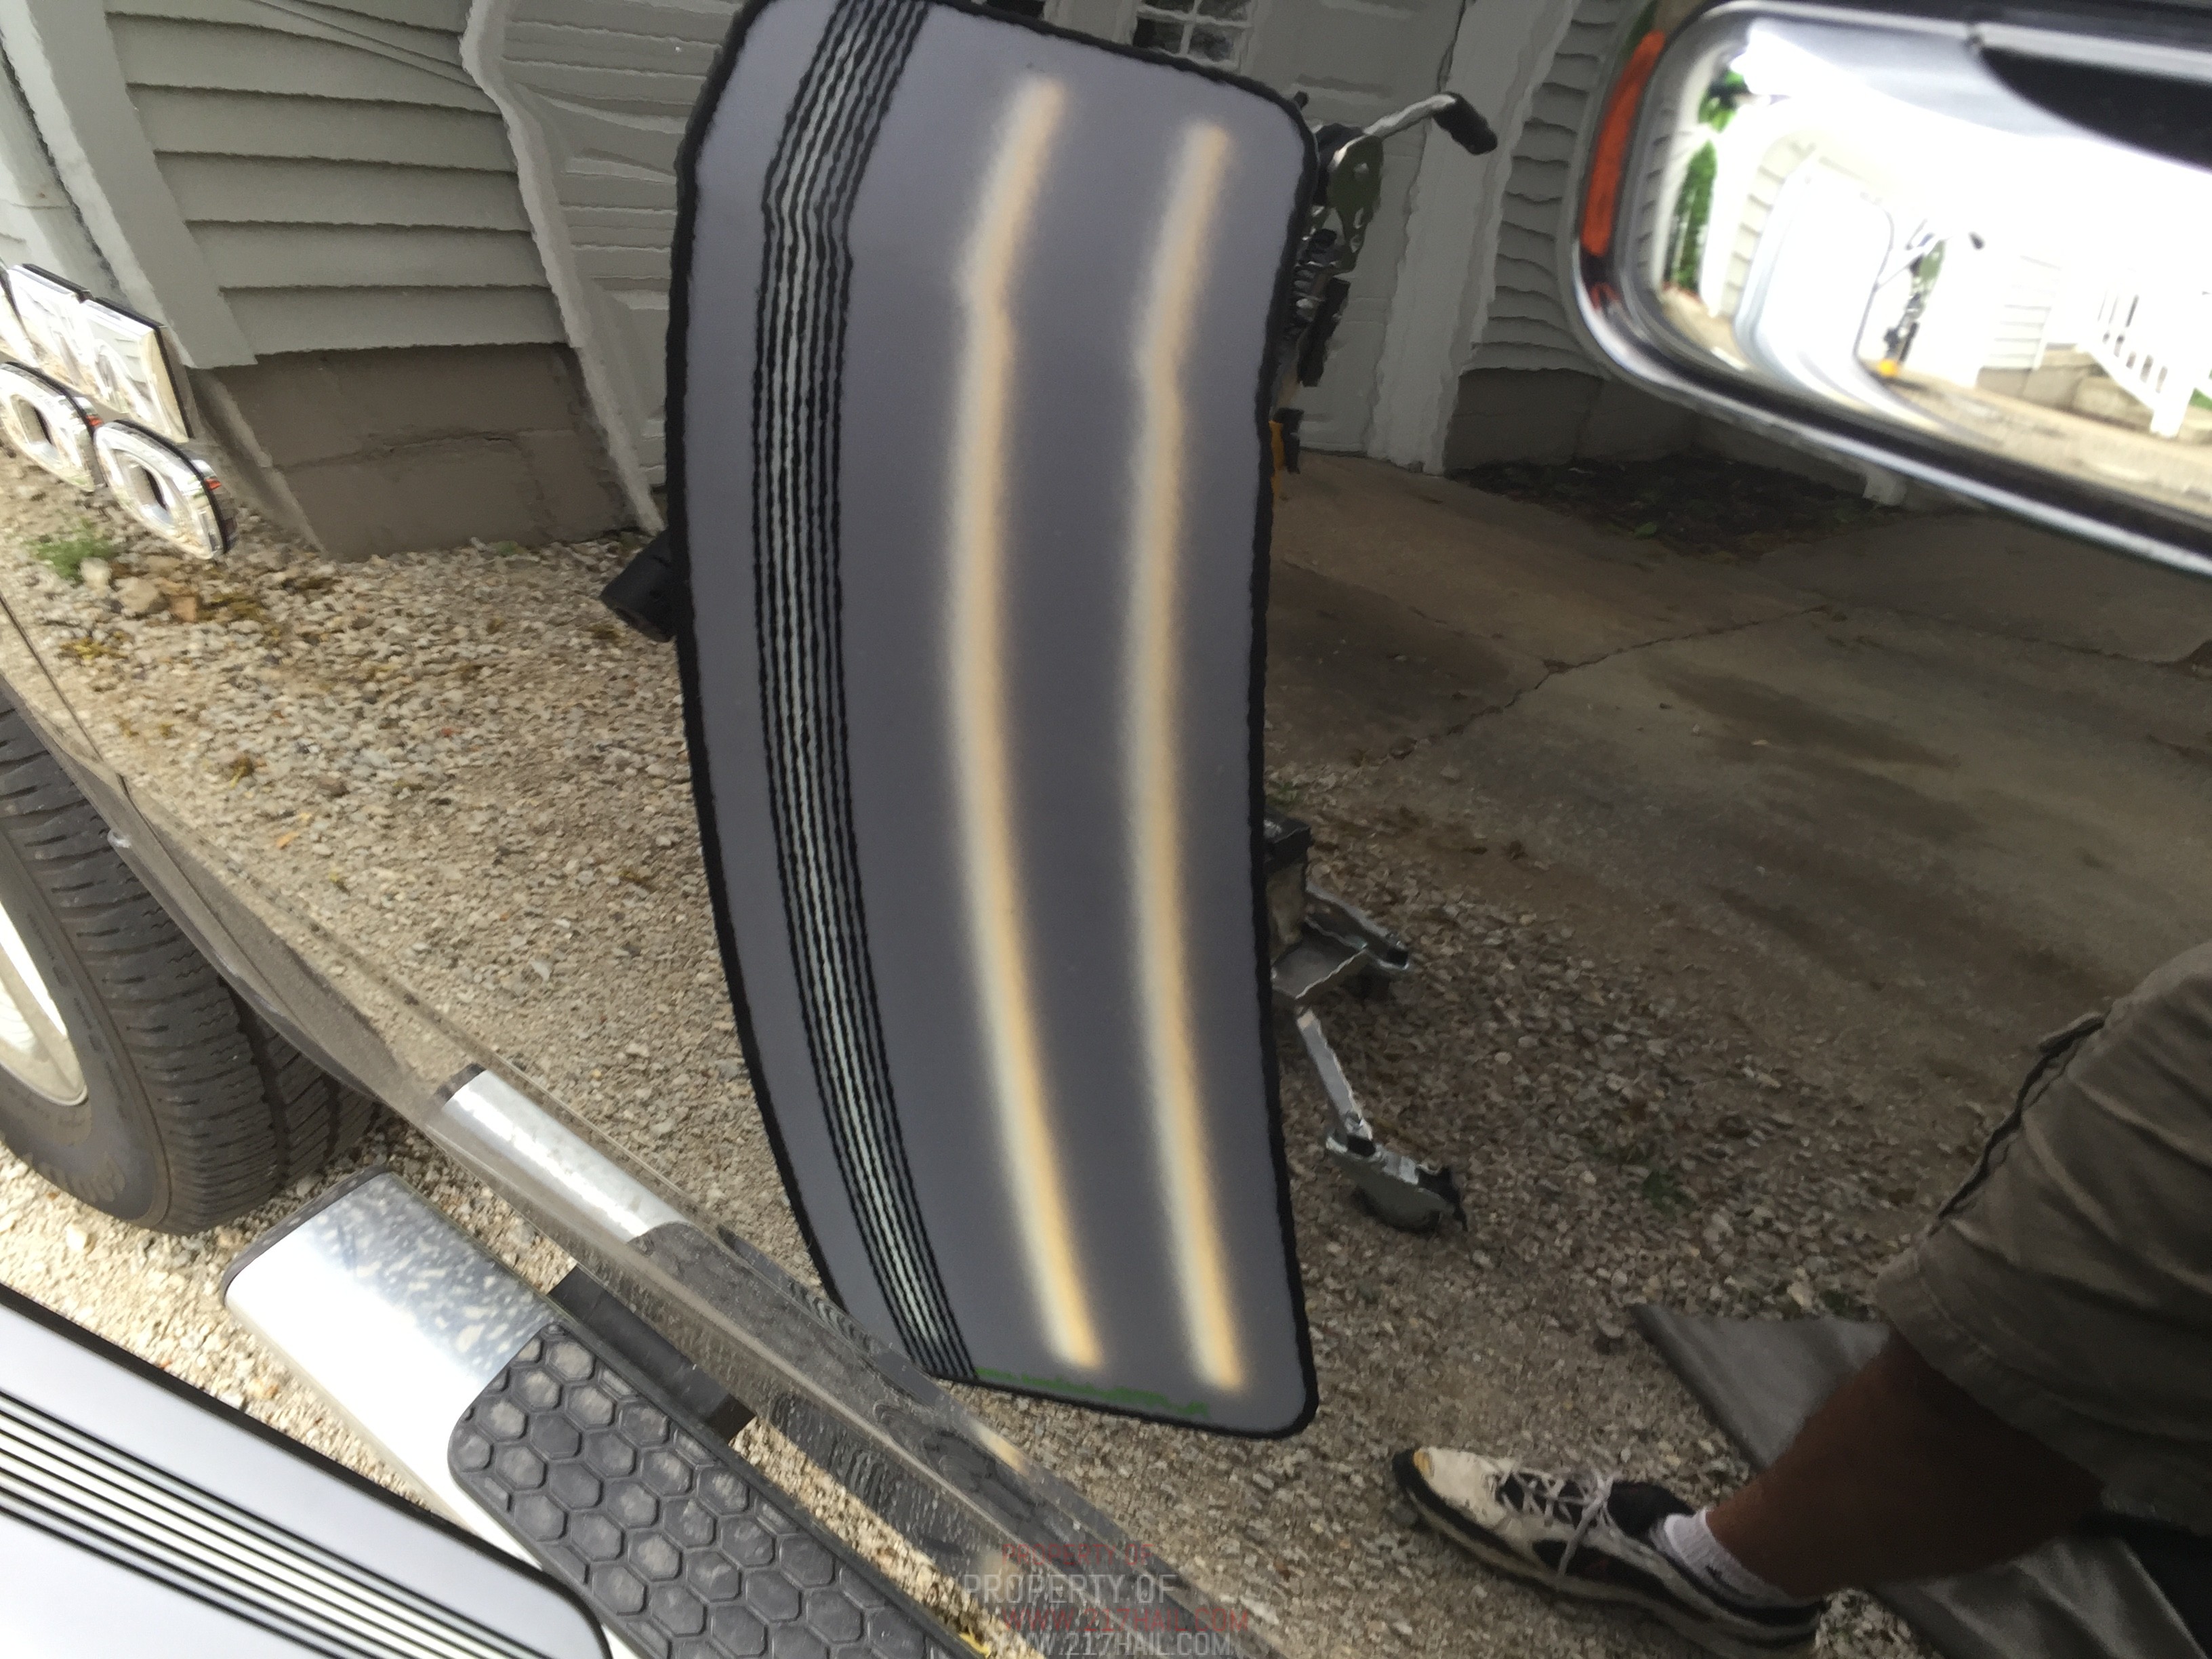 2013 Dodge Ram Drivers Door Dent Removal, Taylorville, IL. Springfield, IL. Mobile Dent repair, http://217dent.com